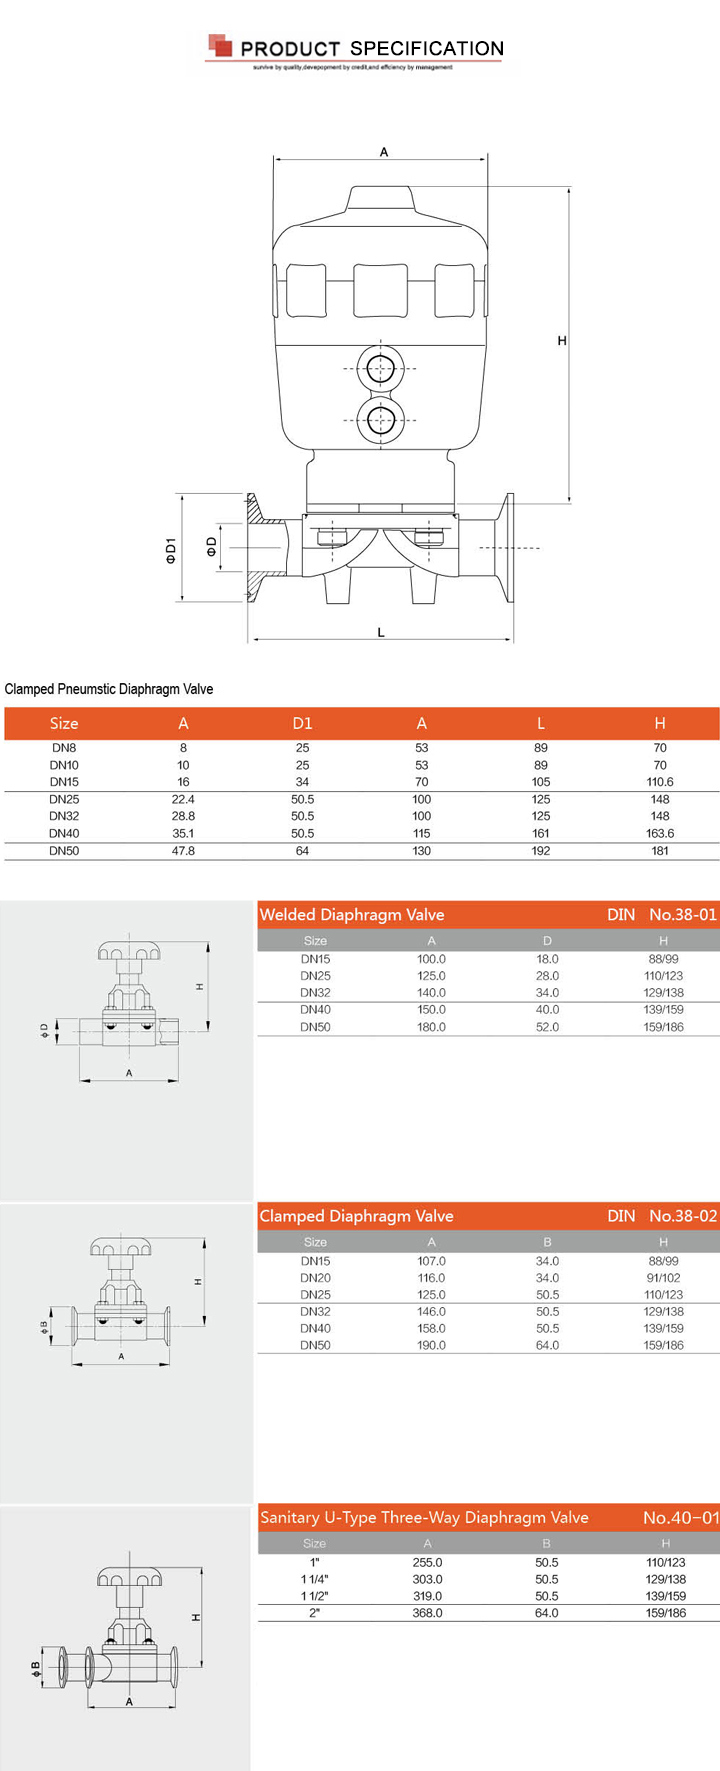 Stainless Steel SS316L Sanitary Manual Diaphragm Bottom Valves